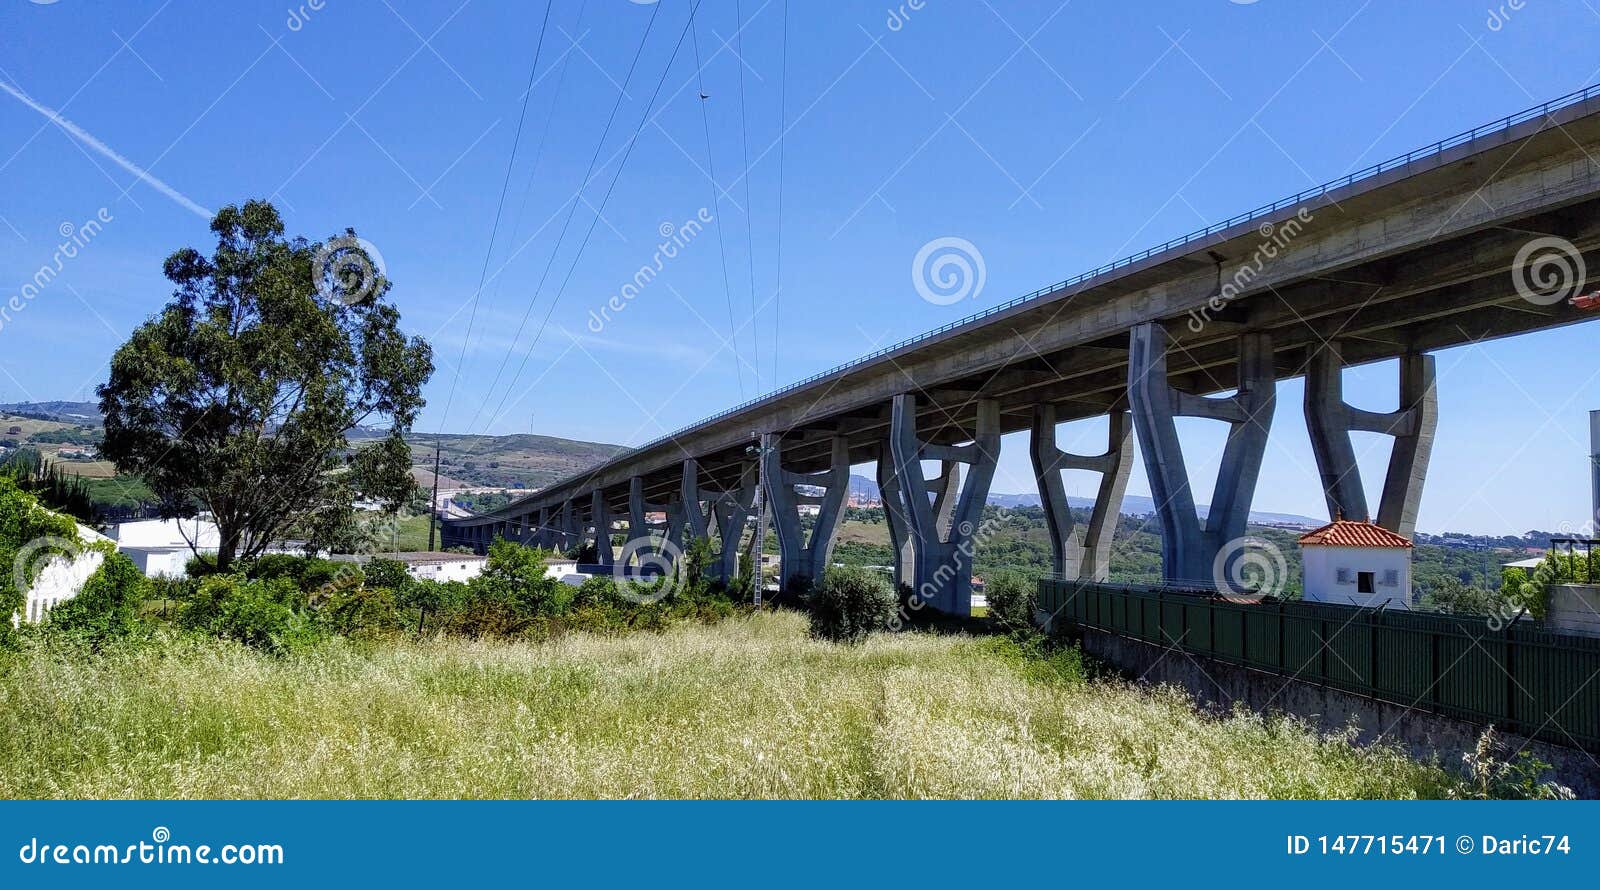 higheay bridge in pinheiro de loures, portugal